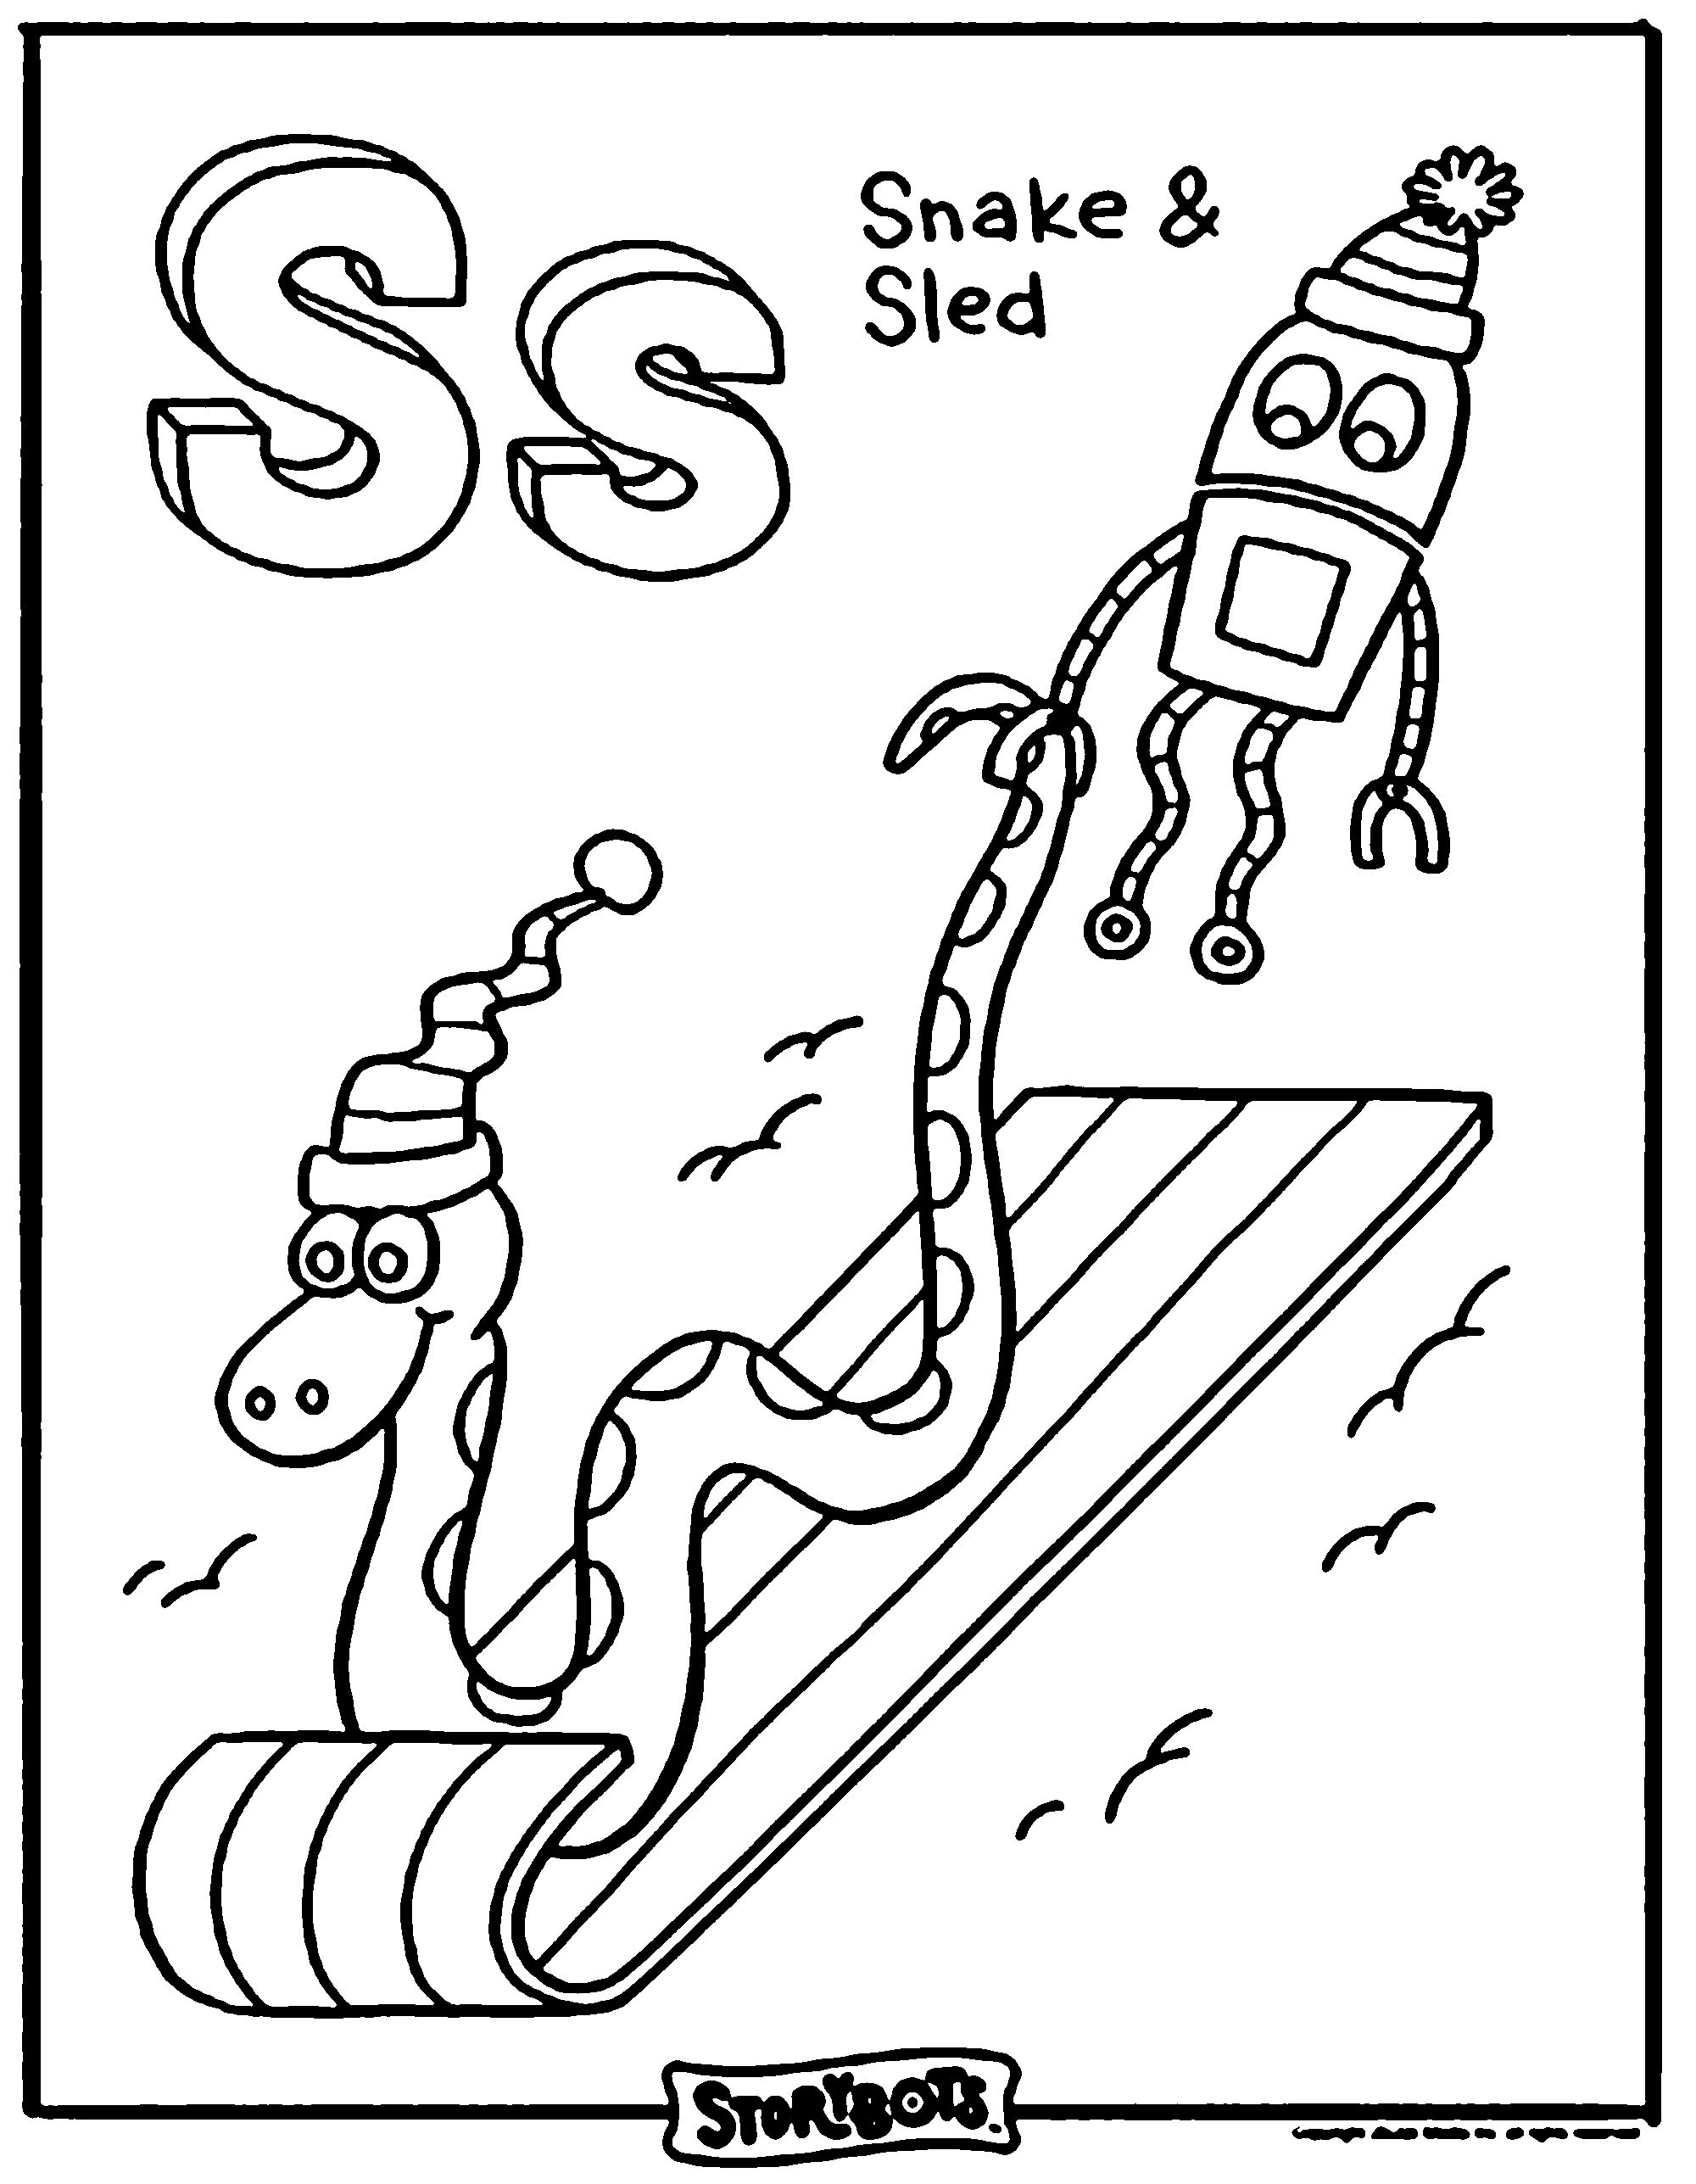 StoryBots Alphabet Coloring Pages (Page 1) - Line.17QQ.com